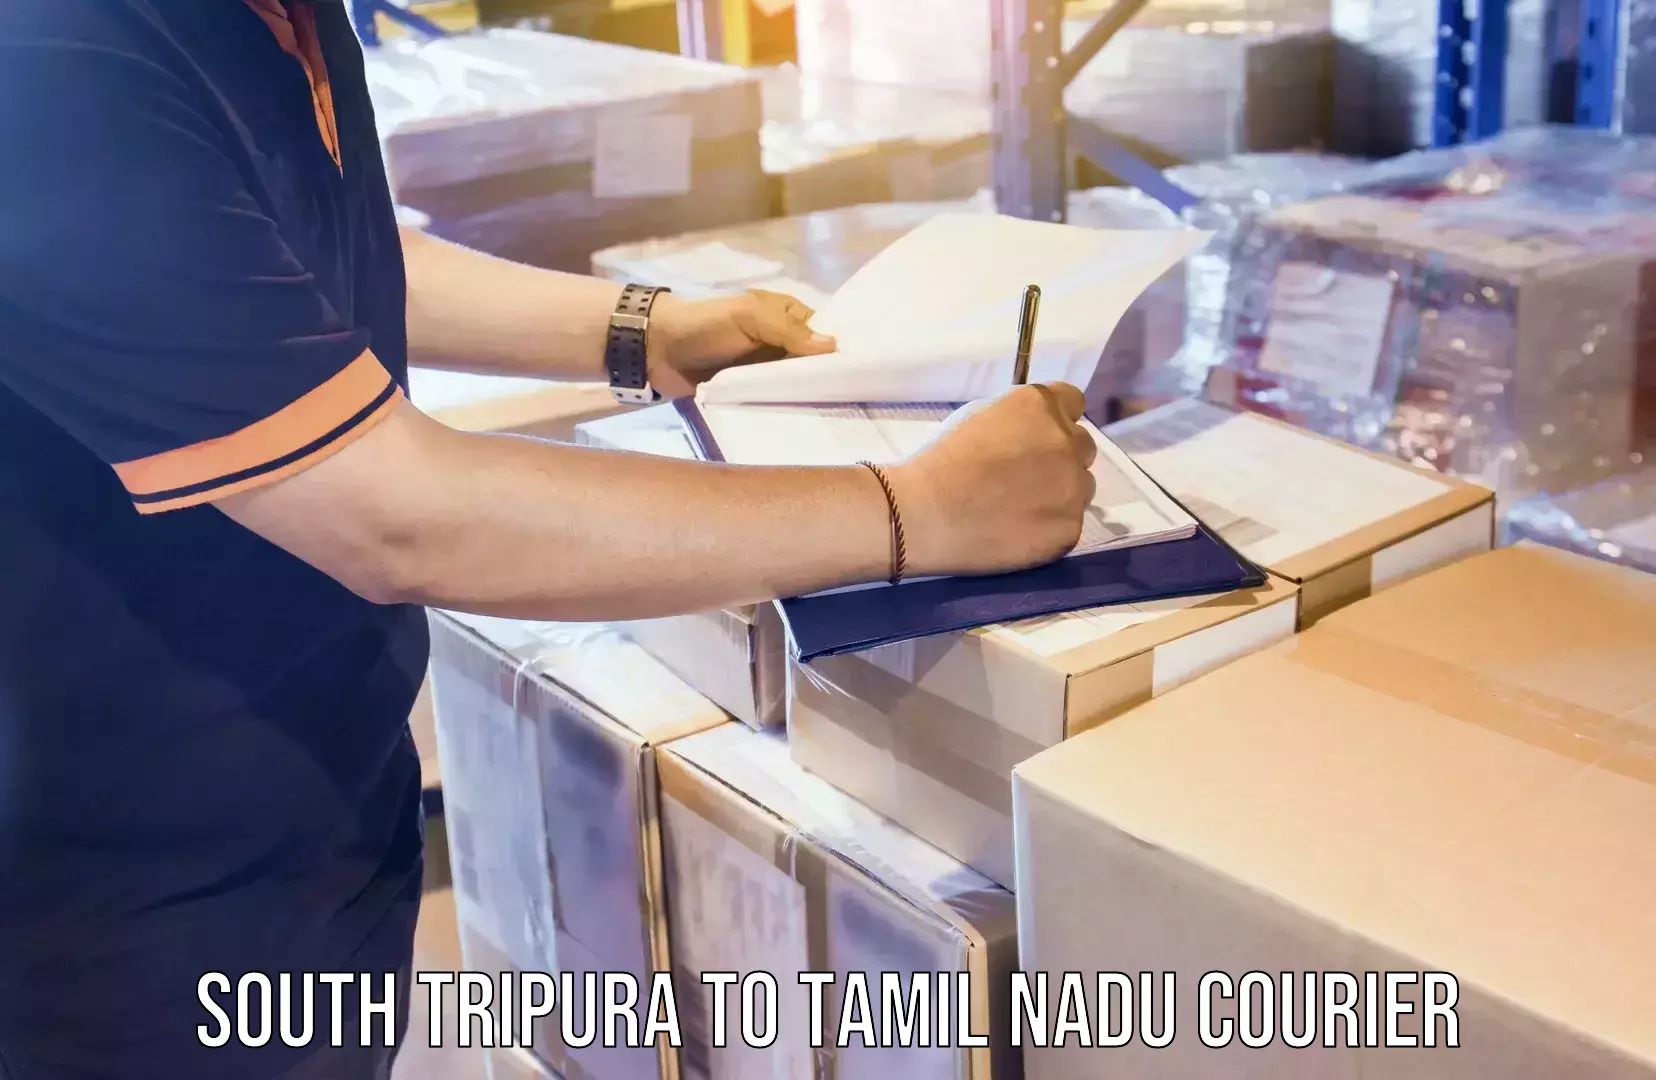 International courier networks South Tripura to Tamil Nadu